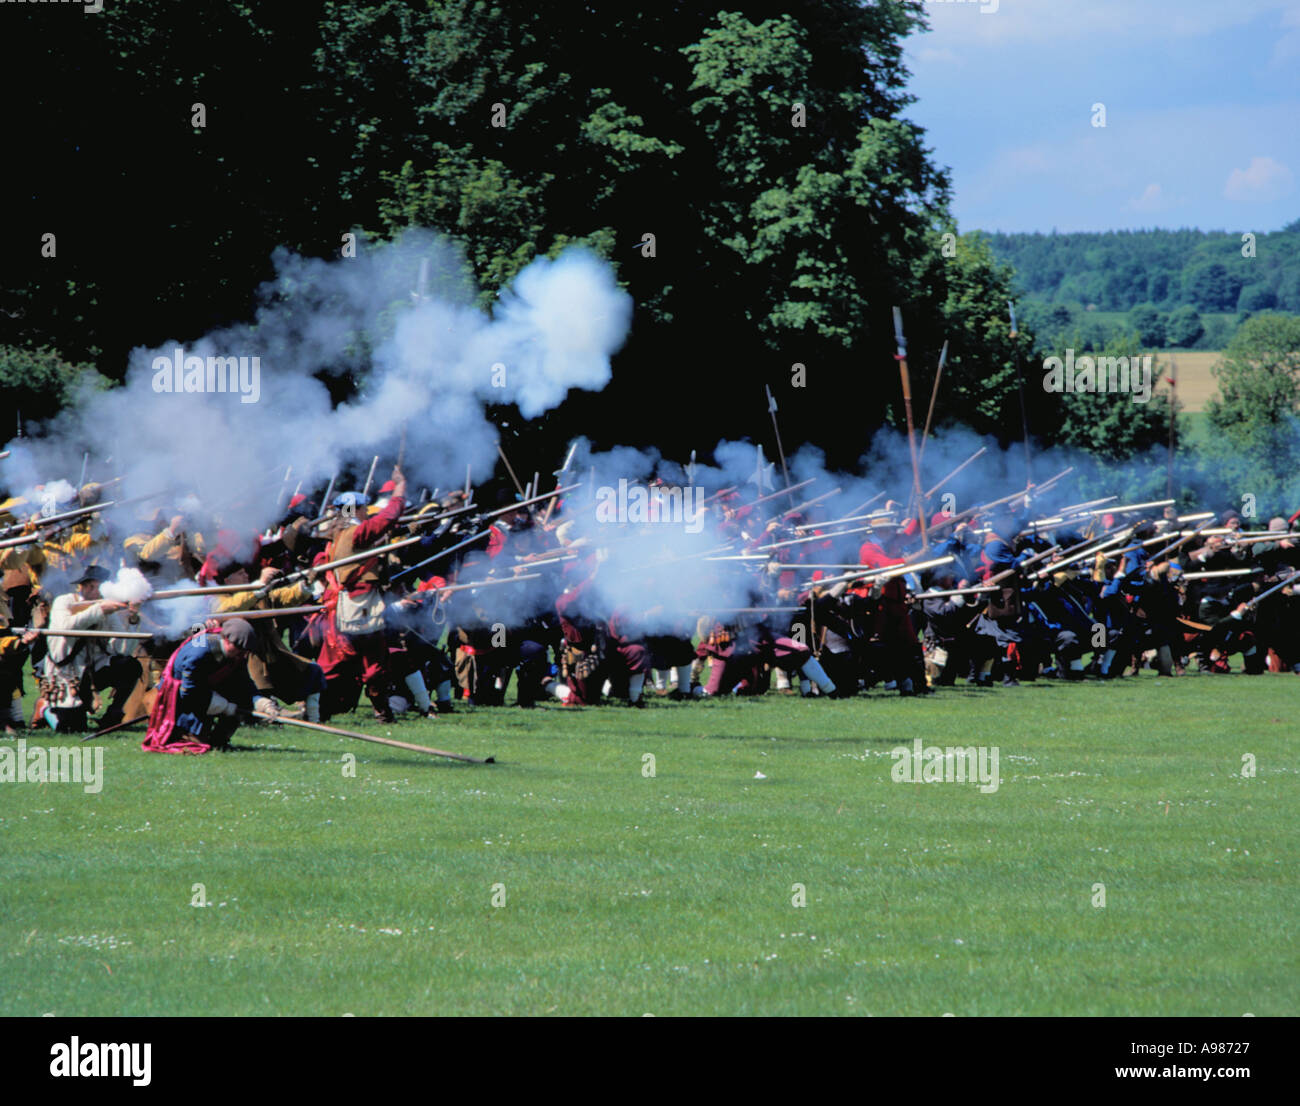 Civil War battle re-enactment, England, UK. Stock Photo